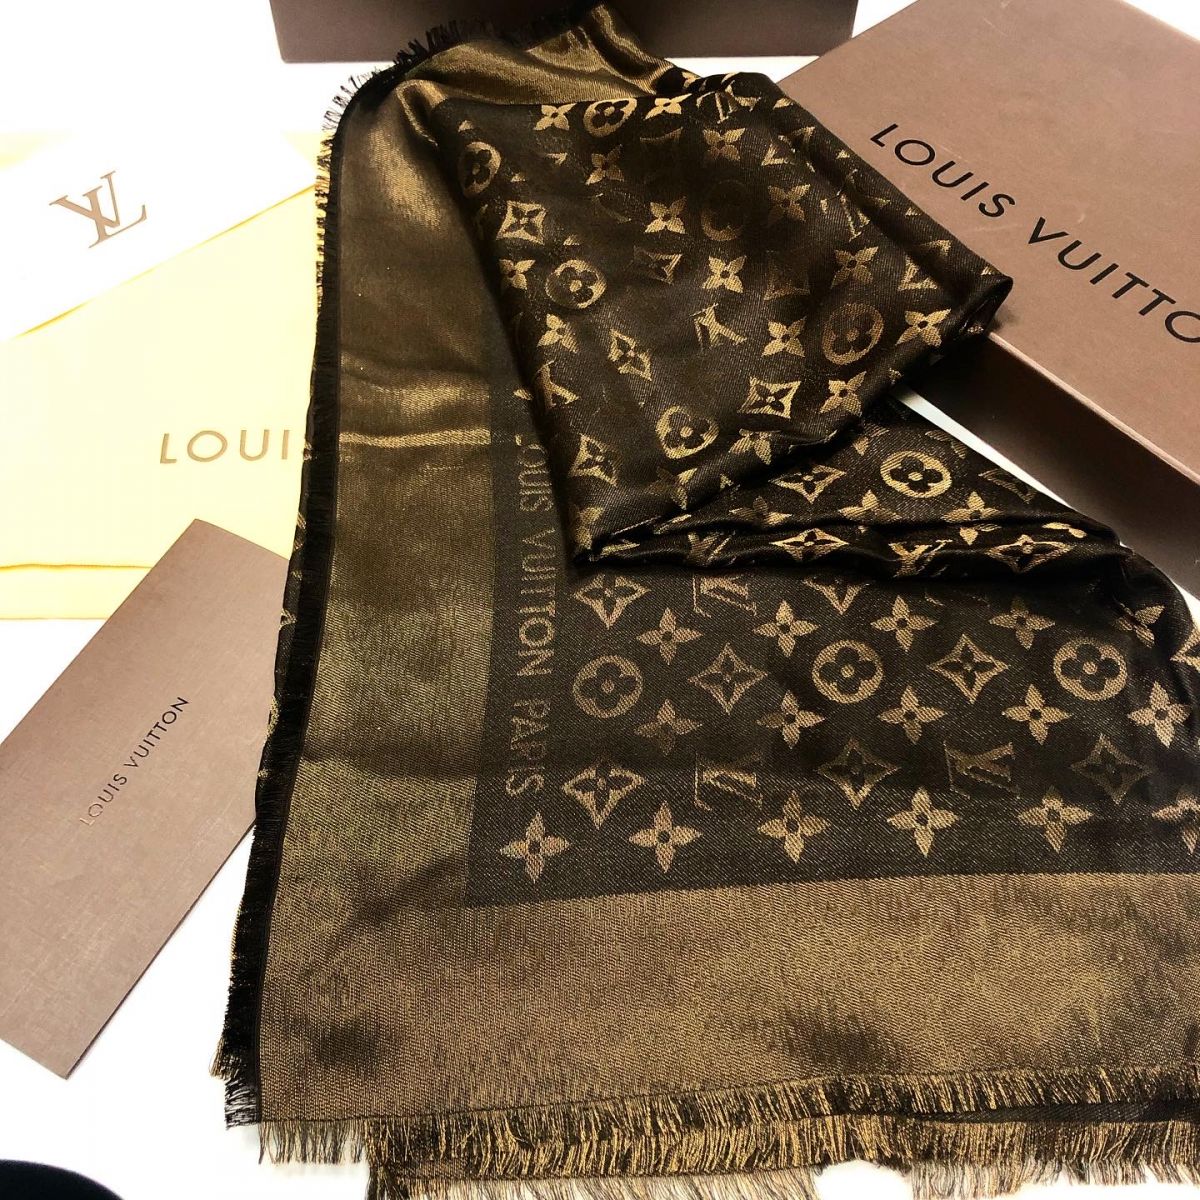 Палантин /люрекс/ Louis Vuitton размер 140/140 цена 12 308 руб 